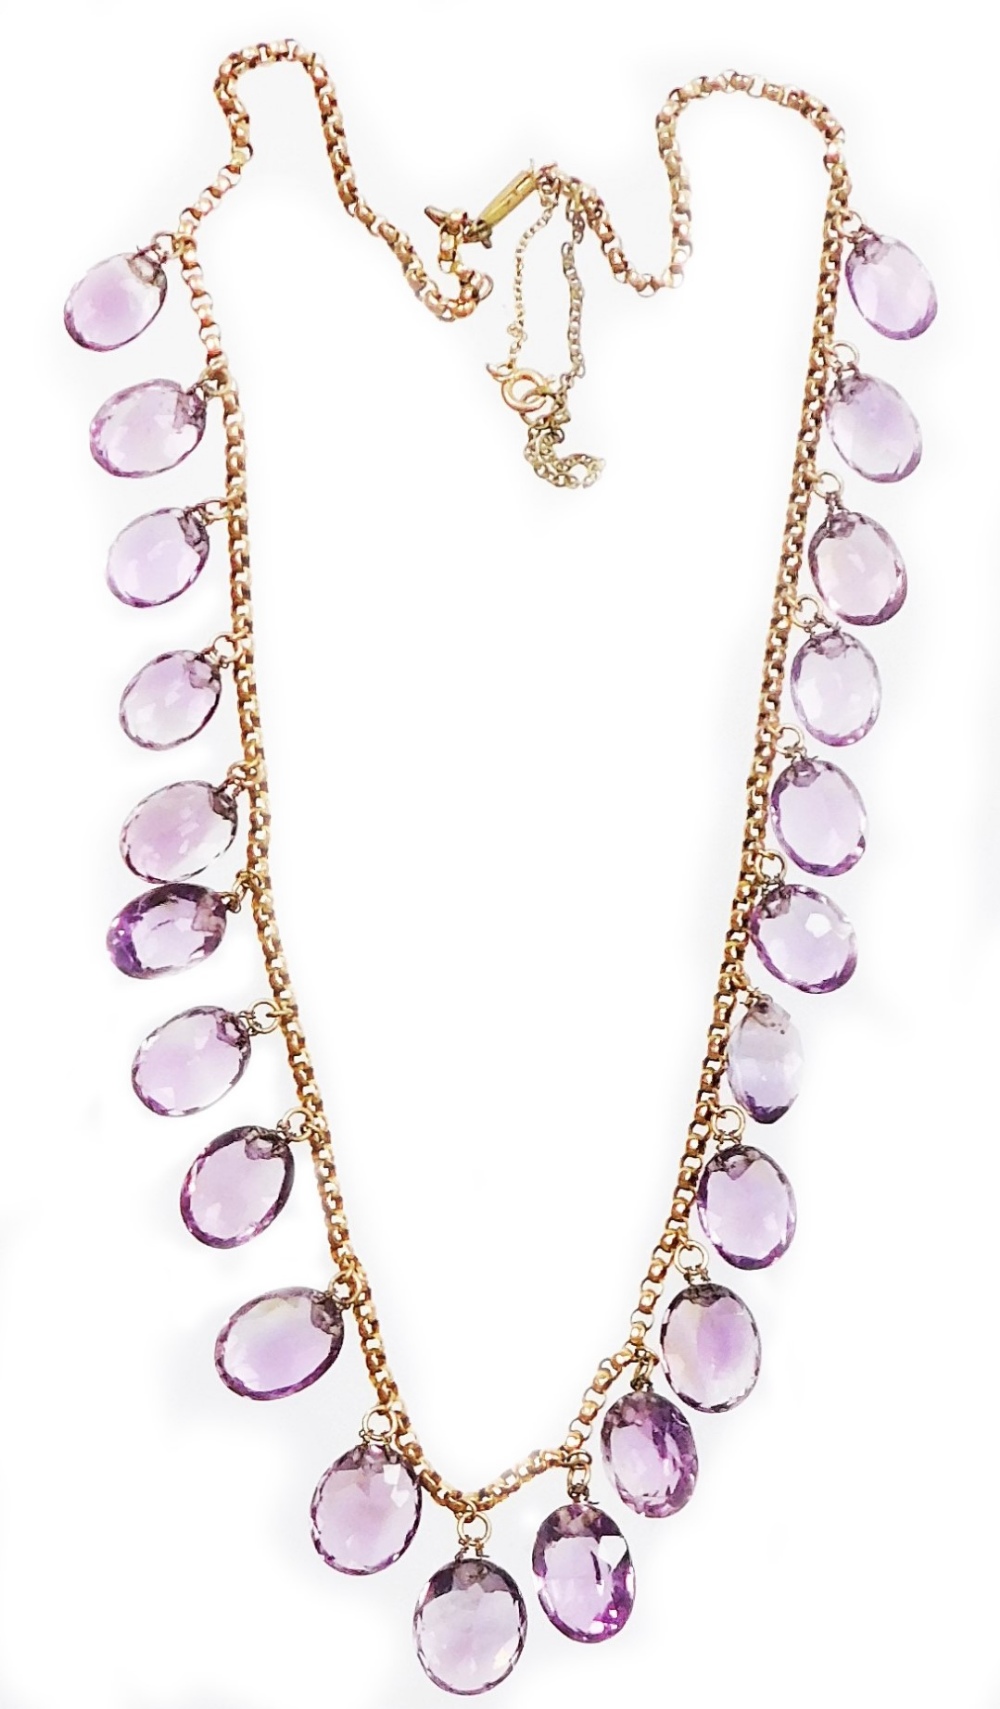 An Edwardian design amethyst graduated beaded necklace, set with twenty two oval cut amethysts, on a